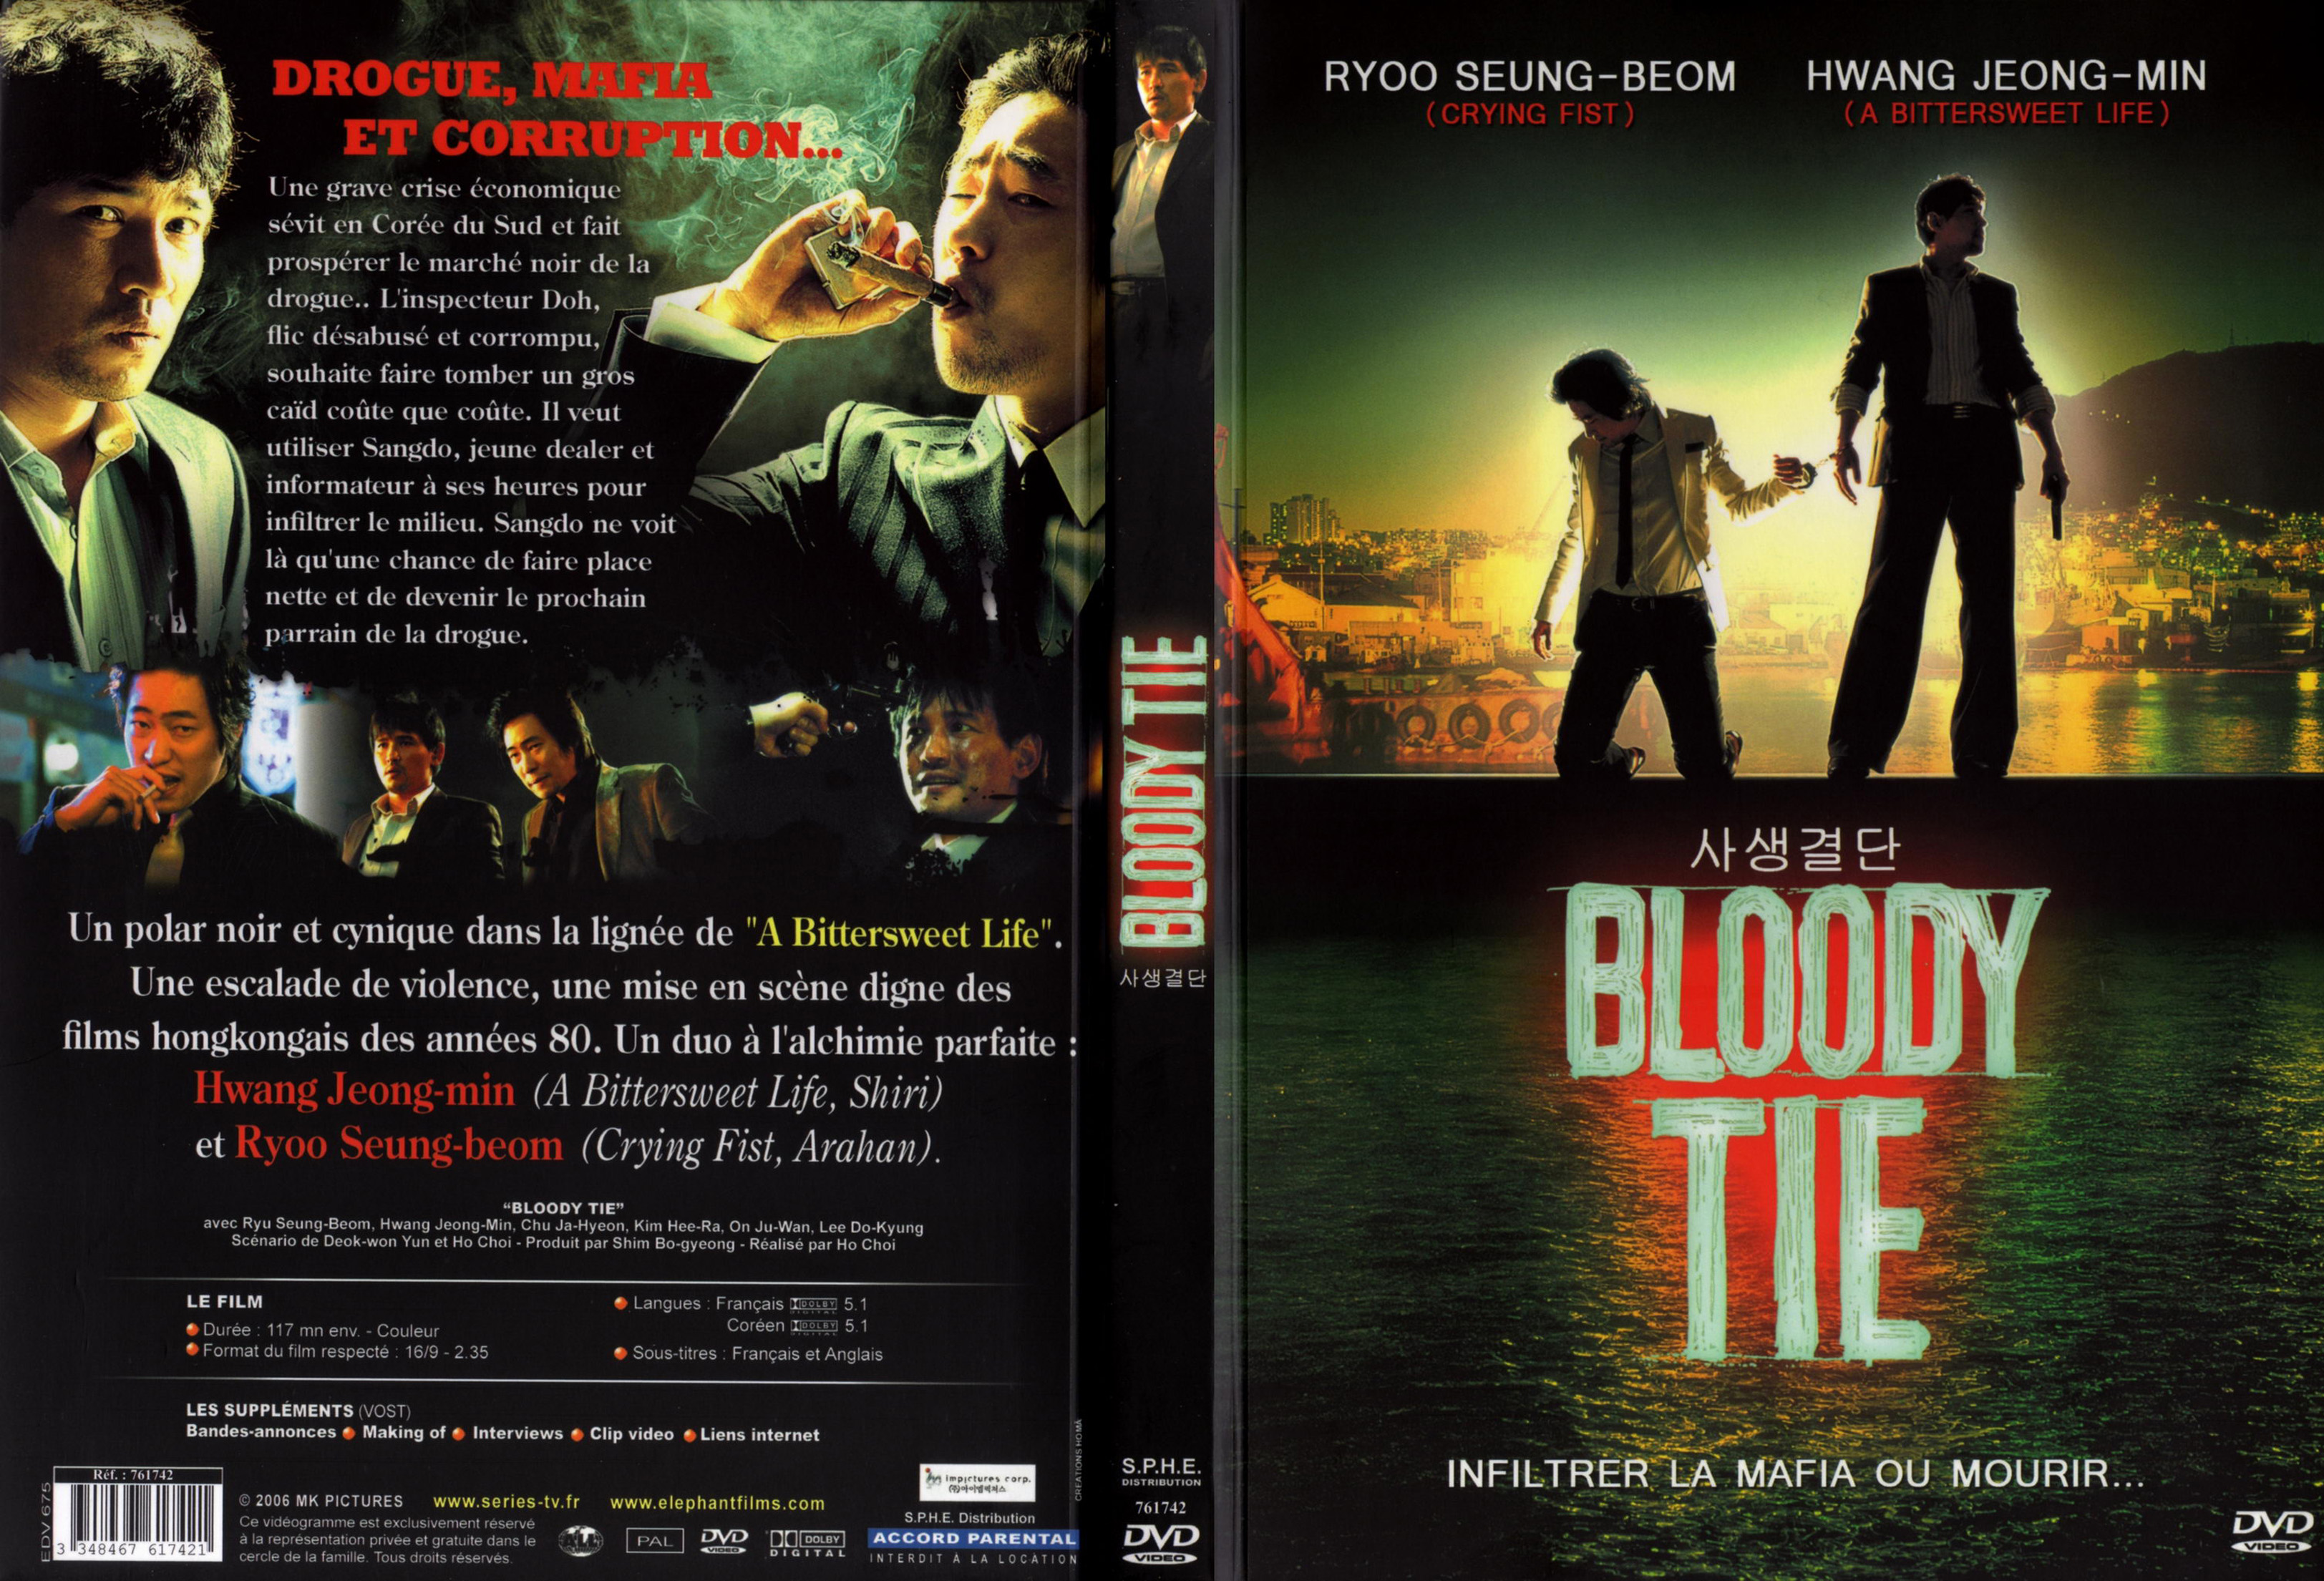 Jaquette DVD Bloody tie